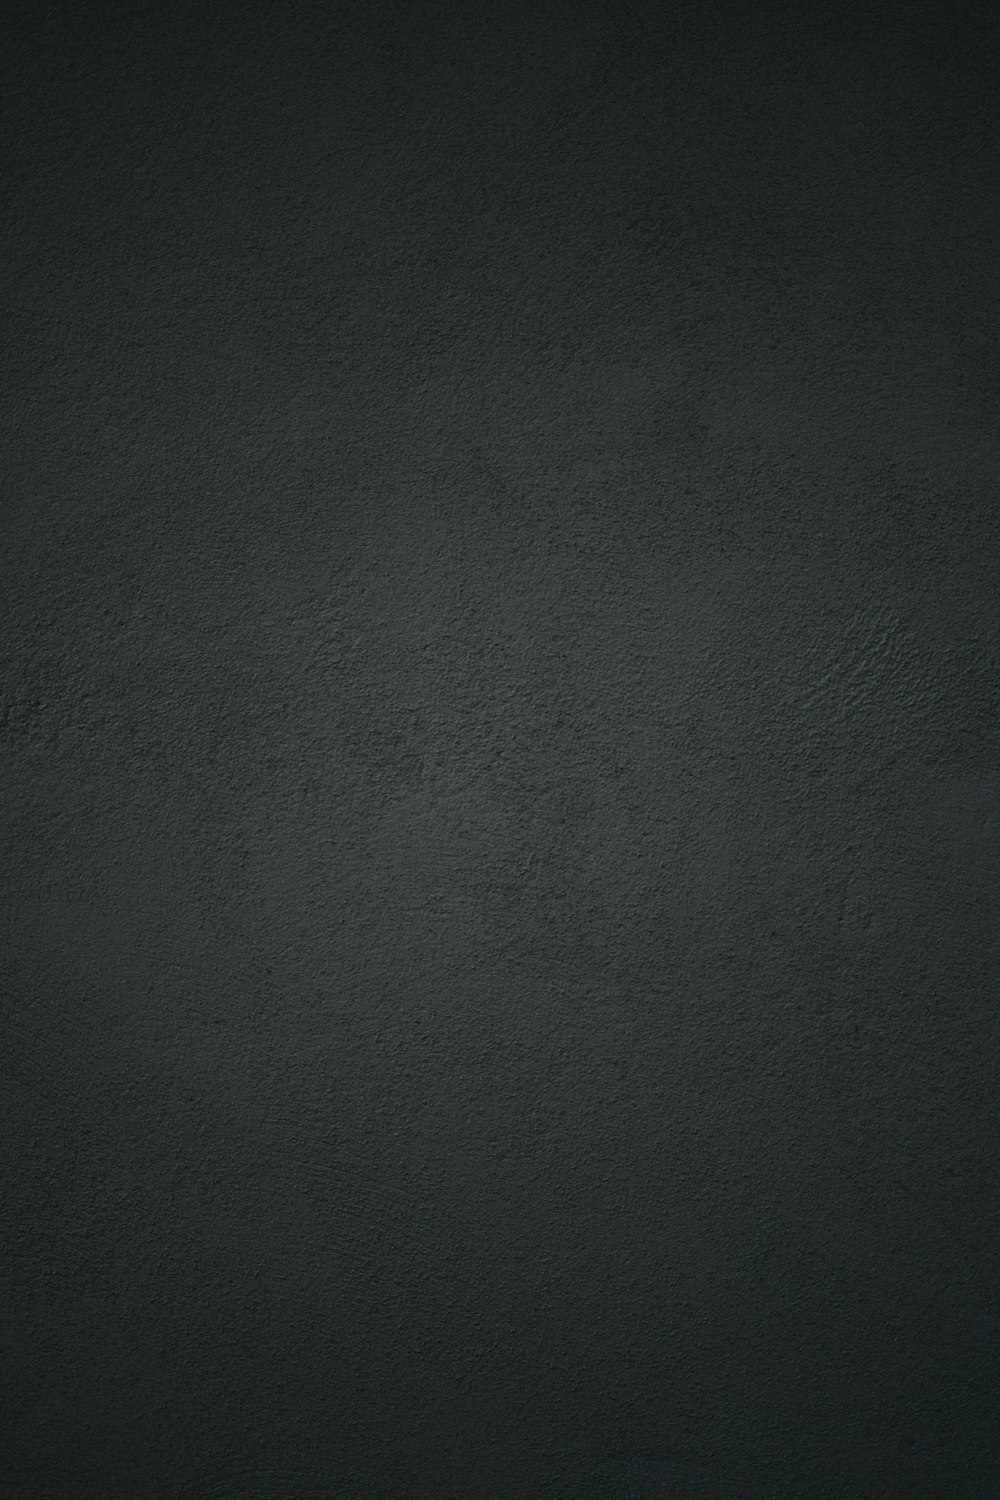 350+ Black Texture Pictures [HQ] | Download Free Images on Unsplash